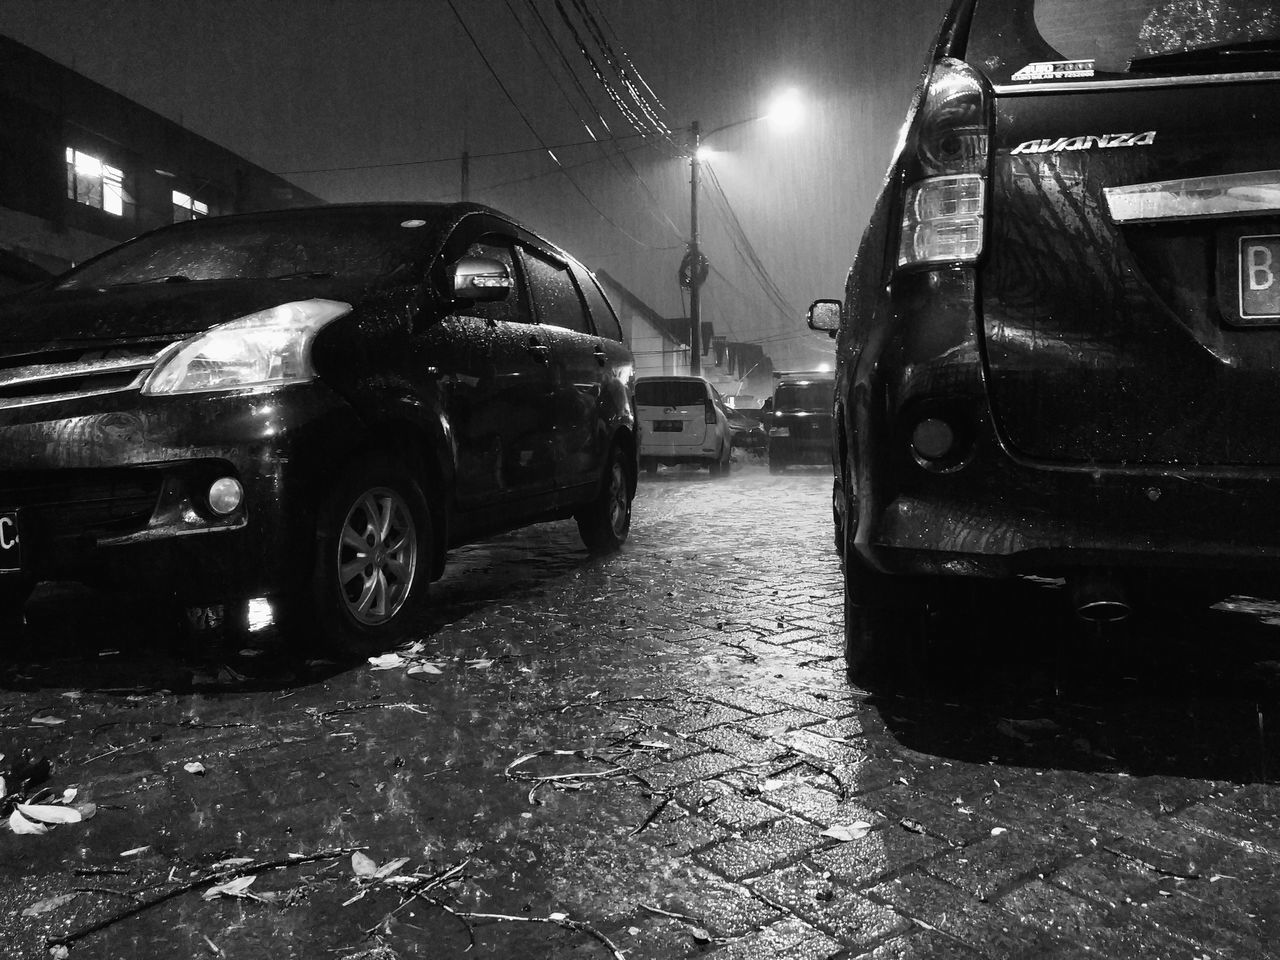 CARS ON WET STREET AT NIGHT